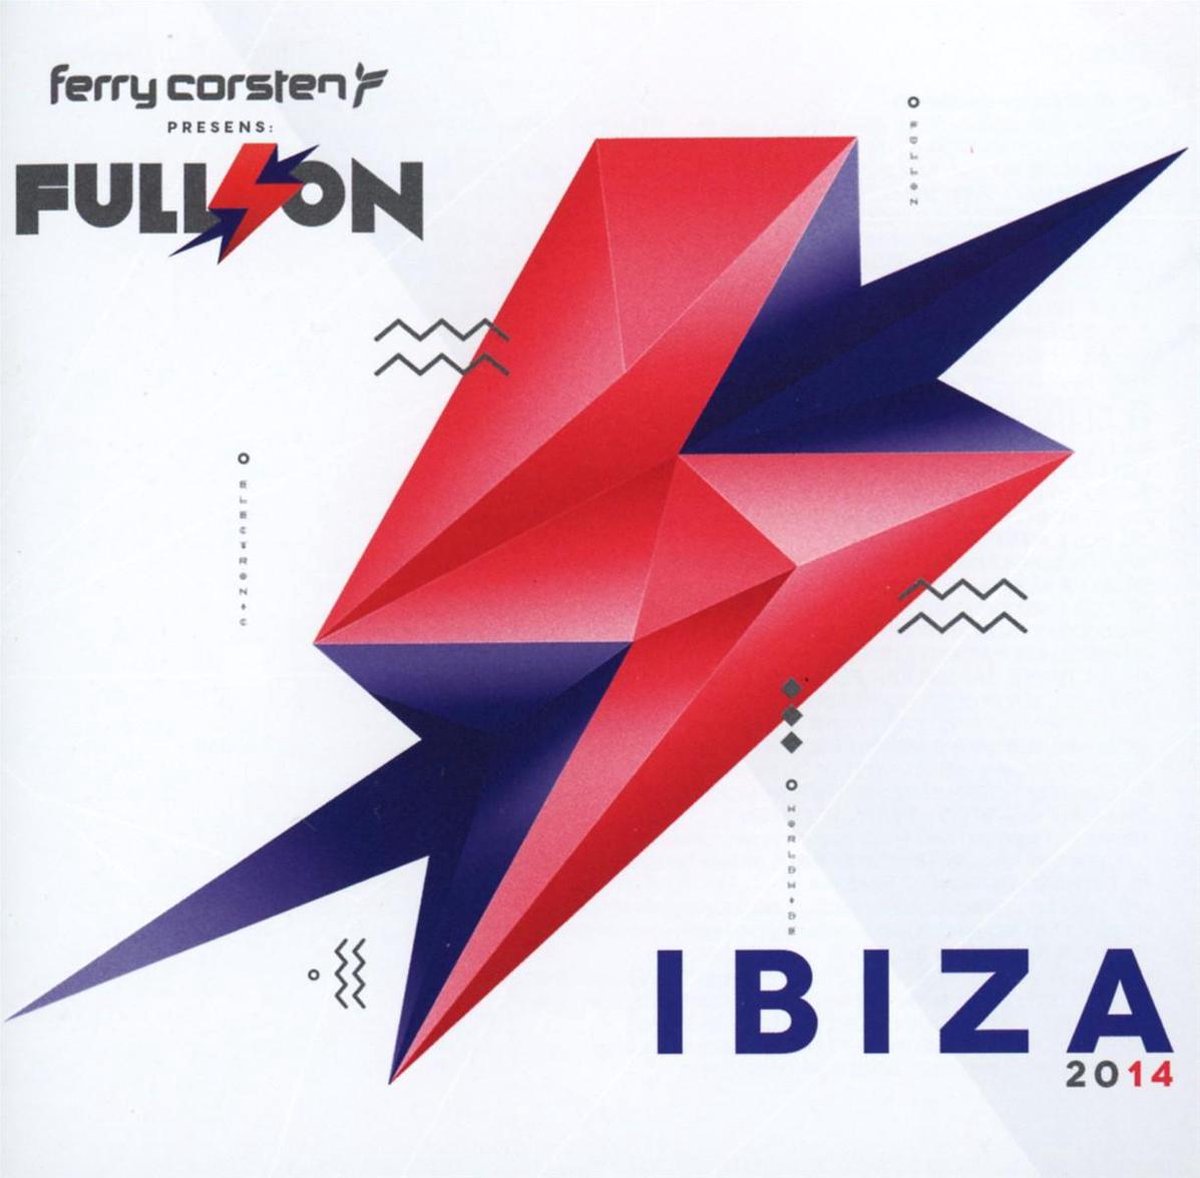 Ferry Corsten Presents Full On Ibiz - various artists